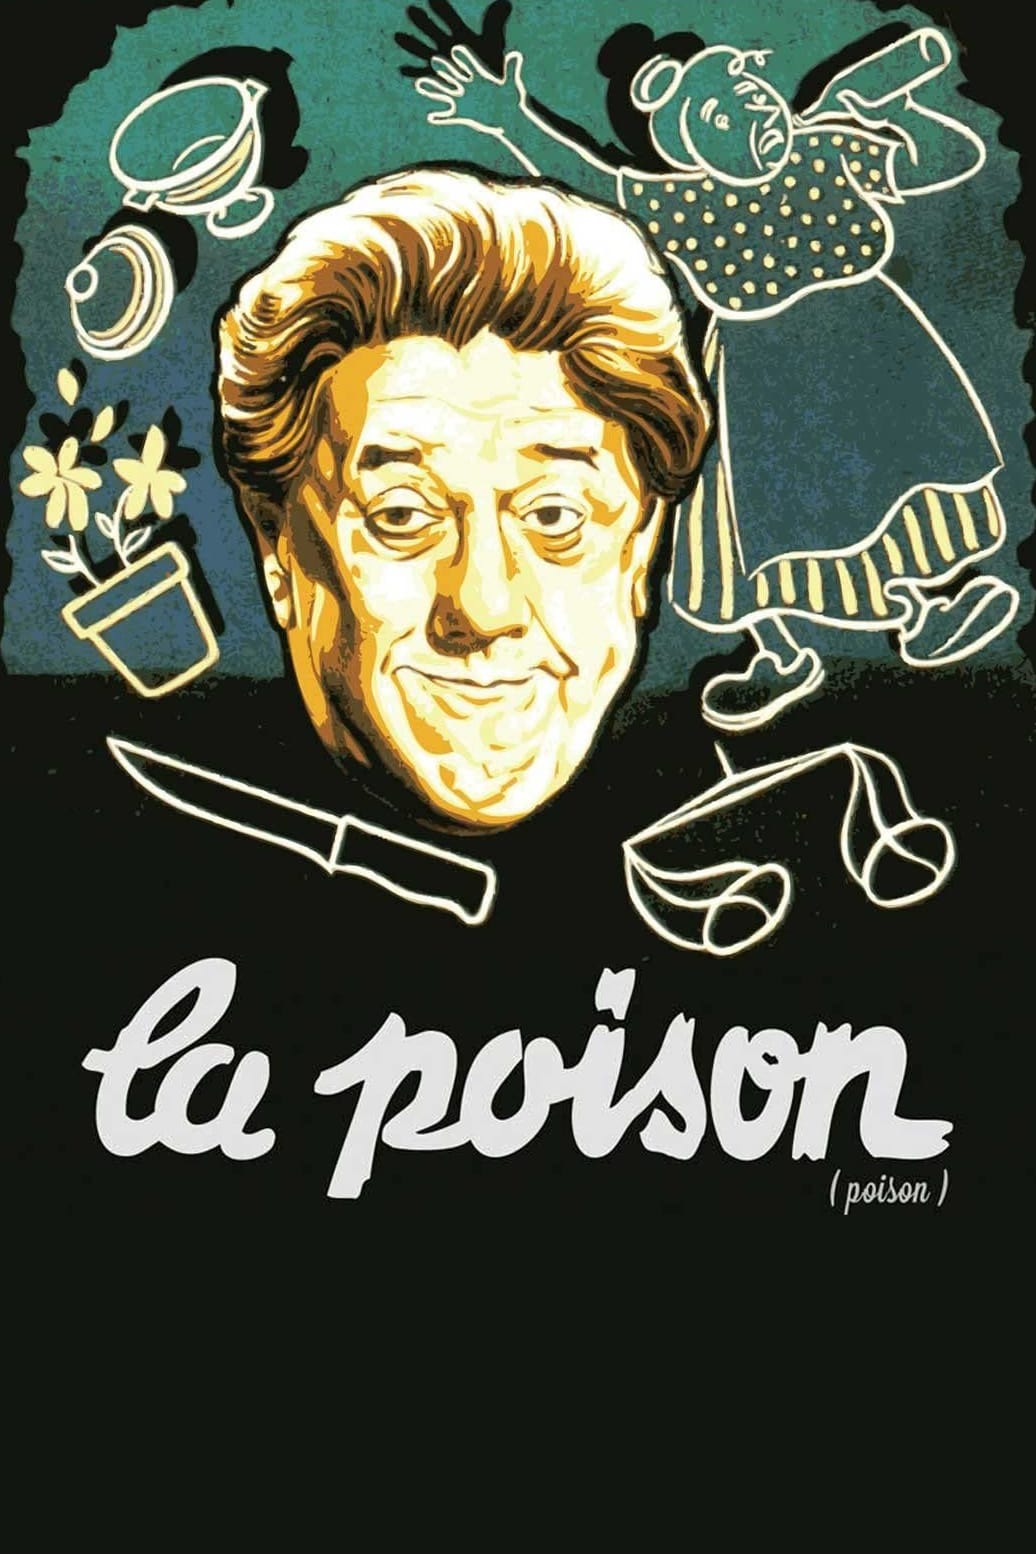 Poison (1951)